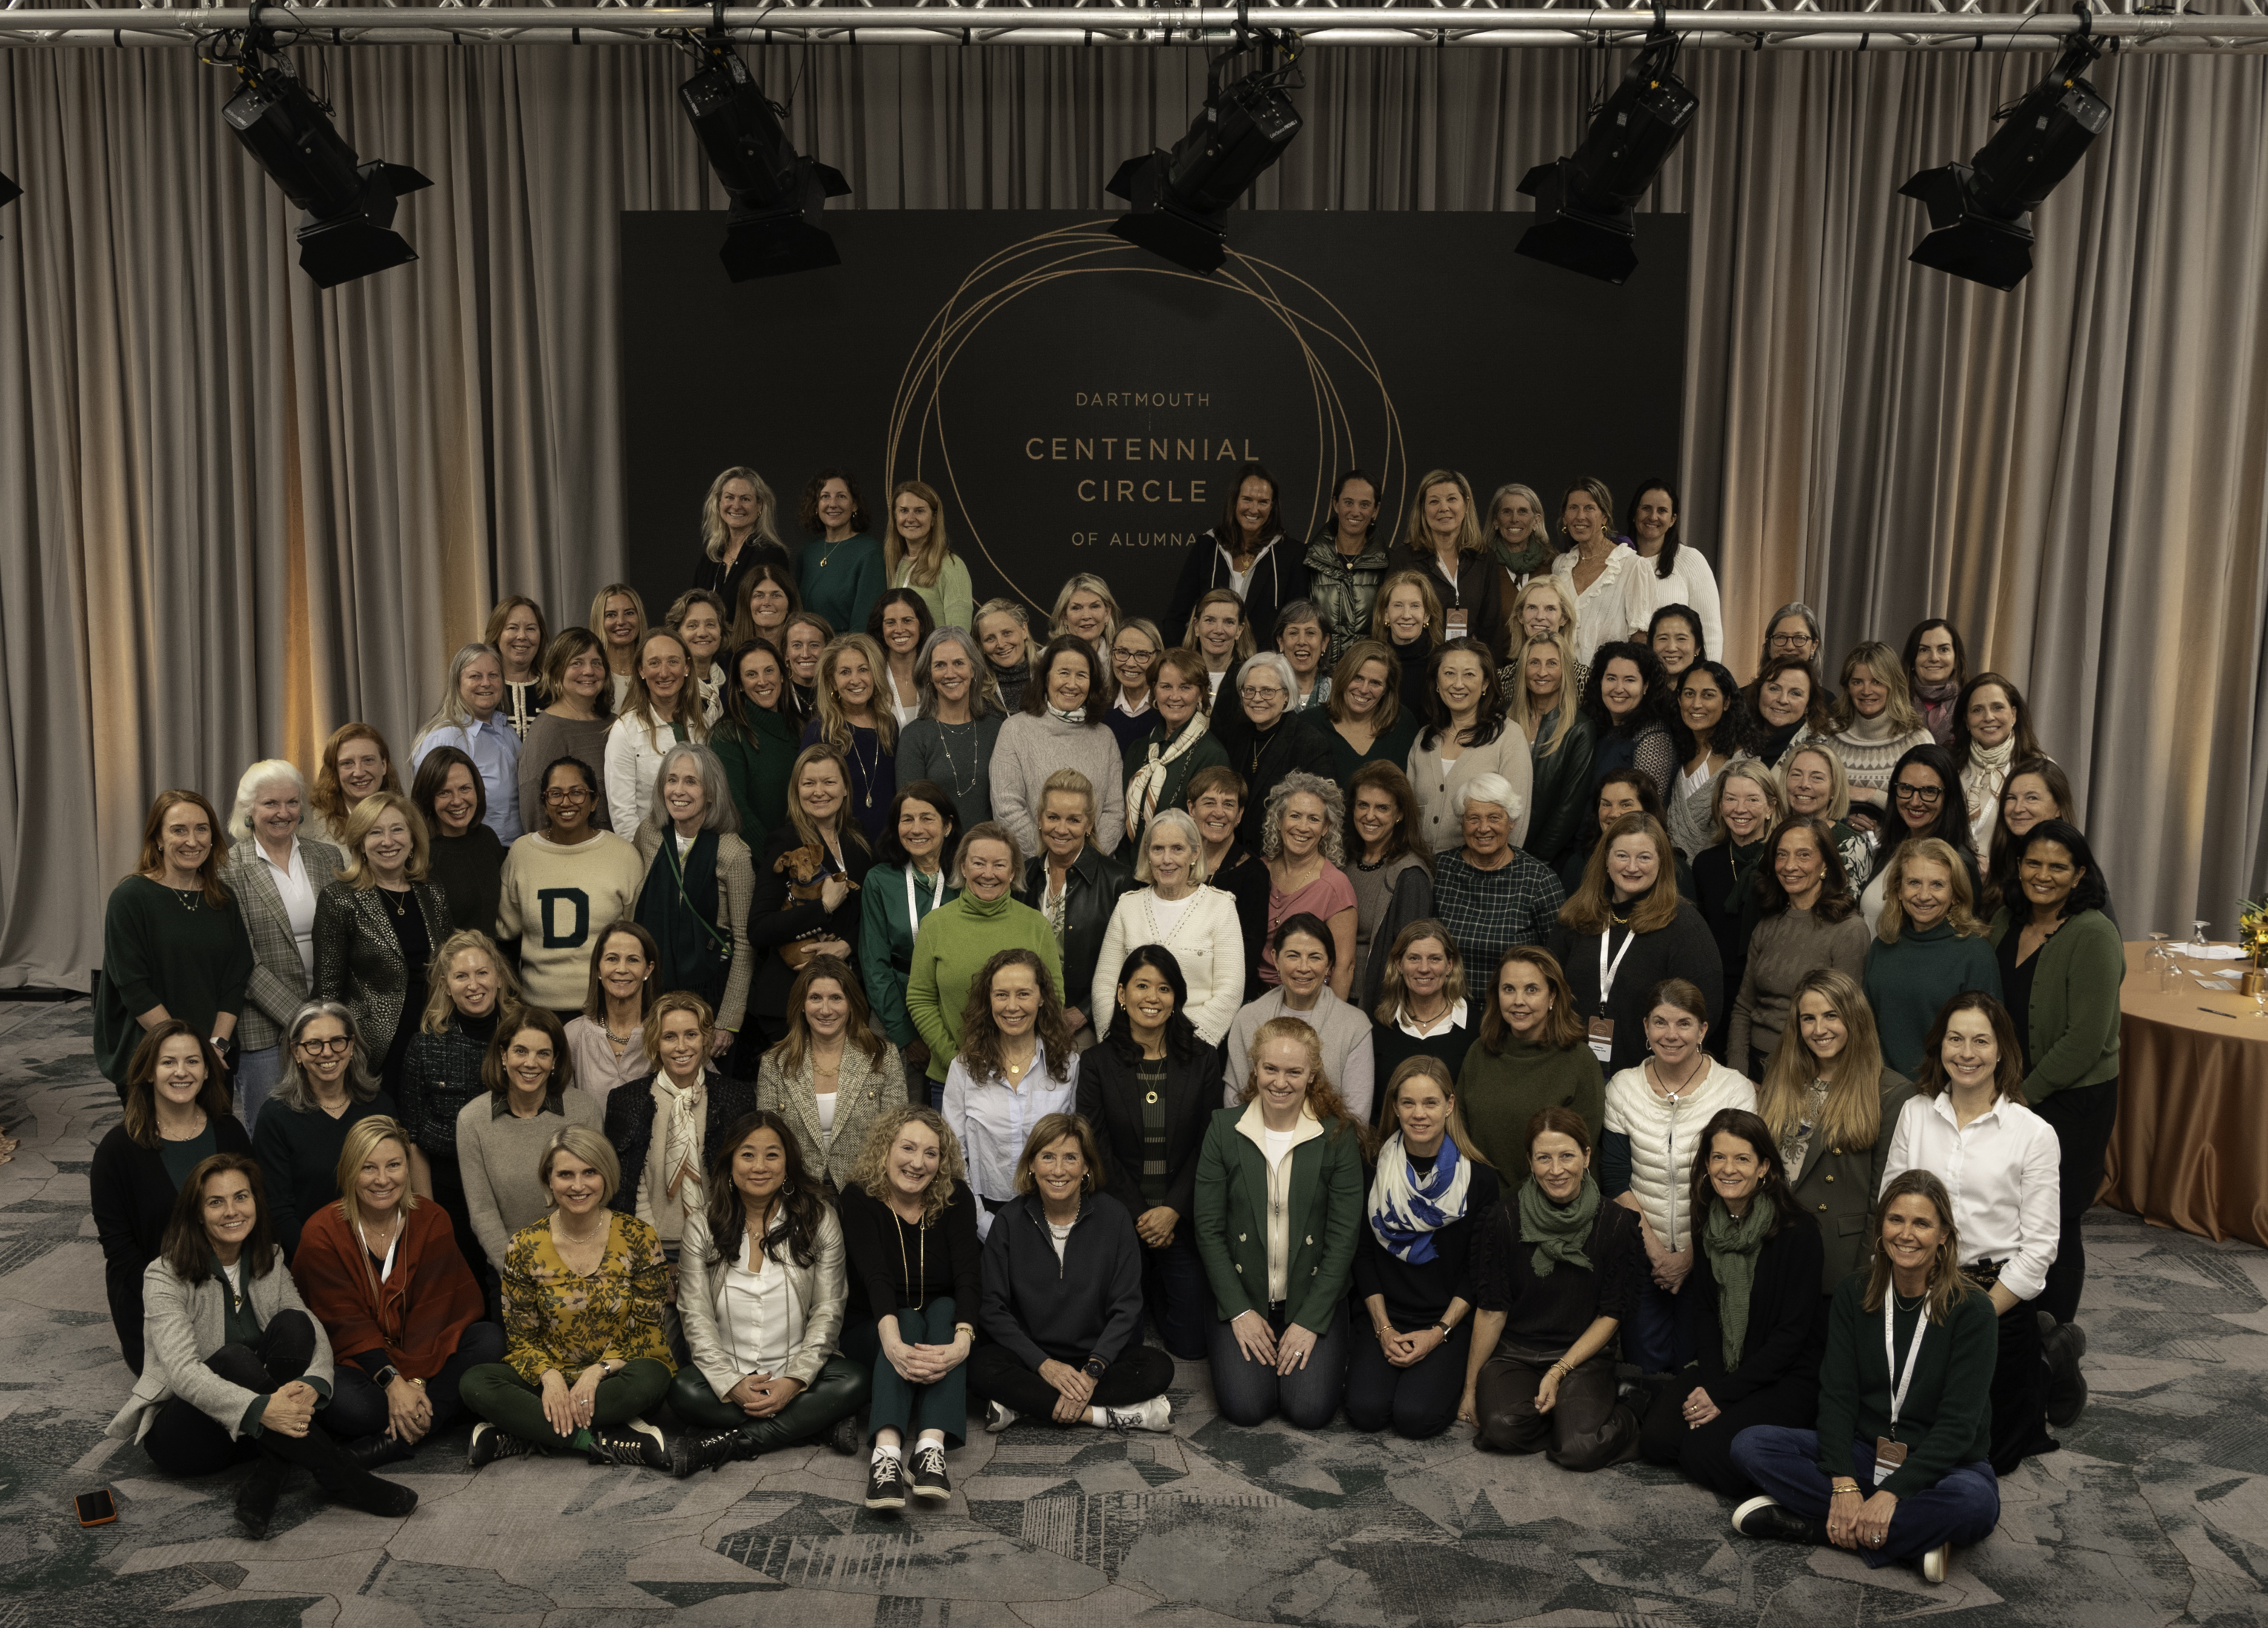 A group photo of the women of the Centennial Circle of Dartmouth Alumnae